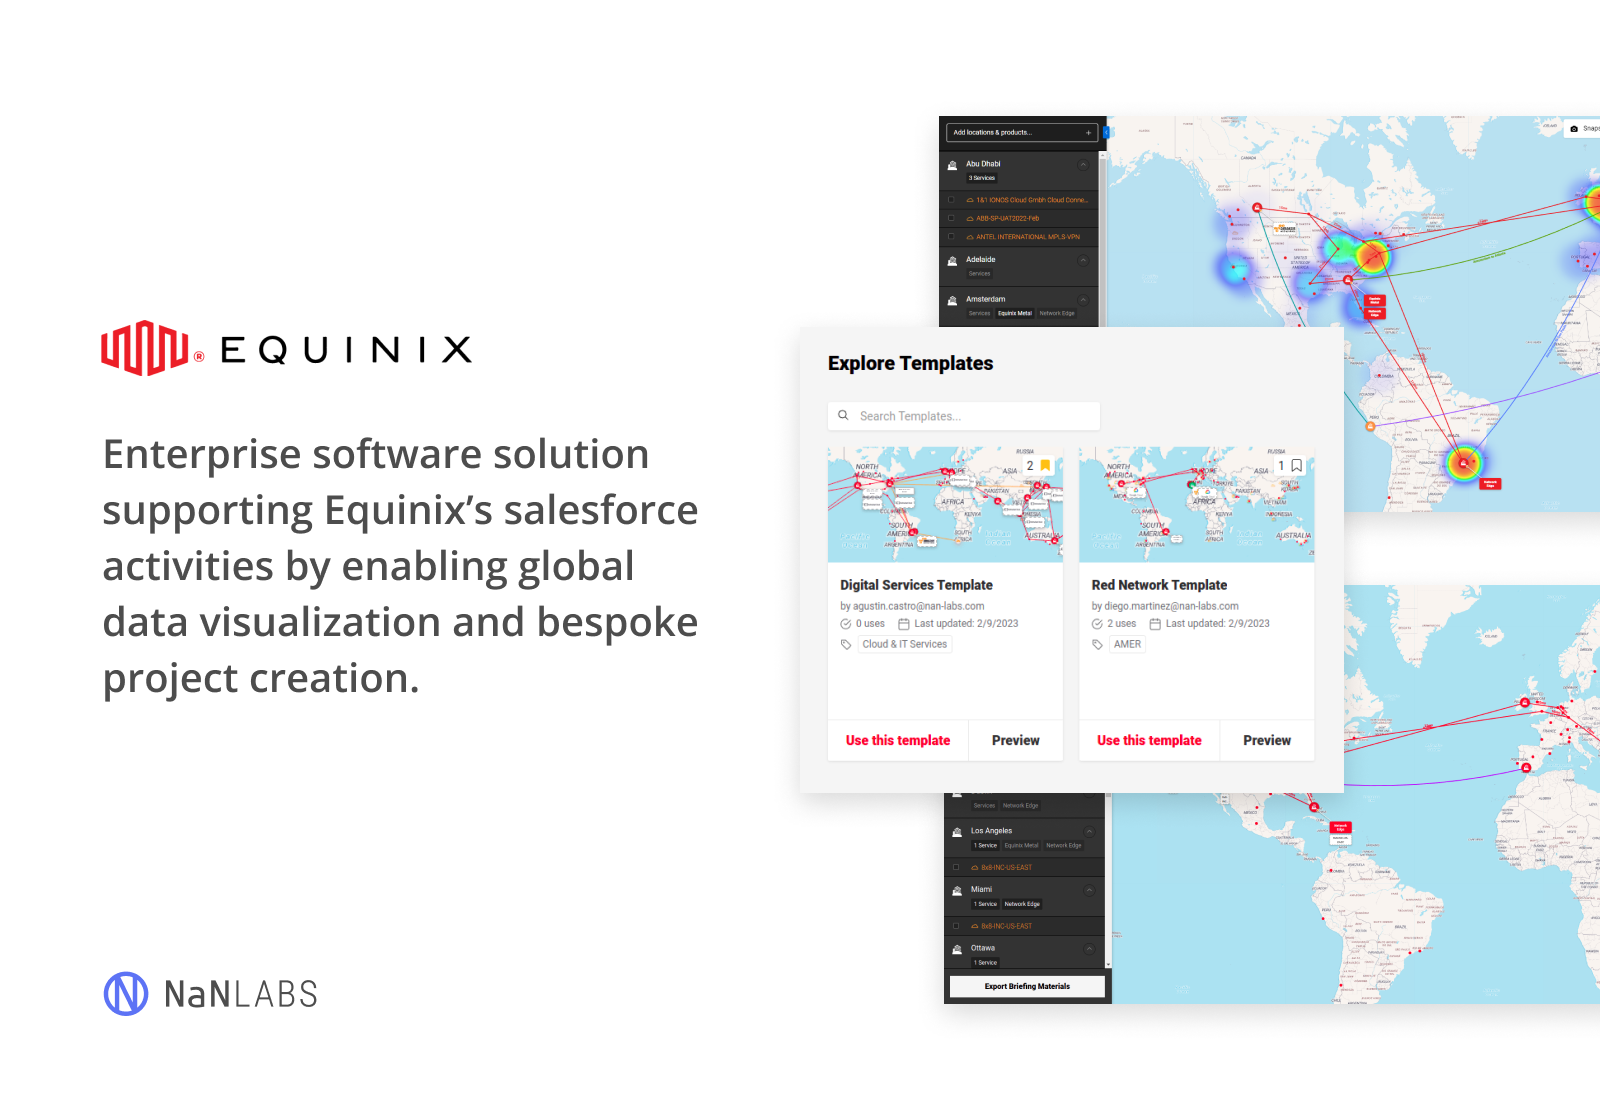  Equinix data visualization templates showing heatmaps on a world map